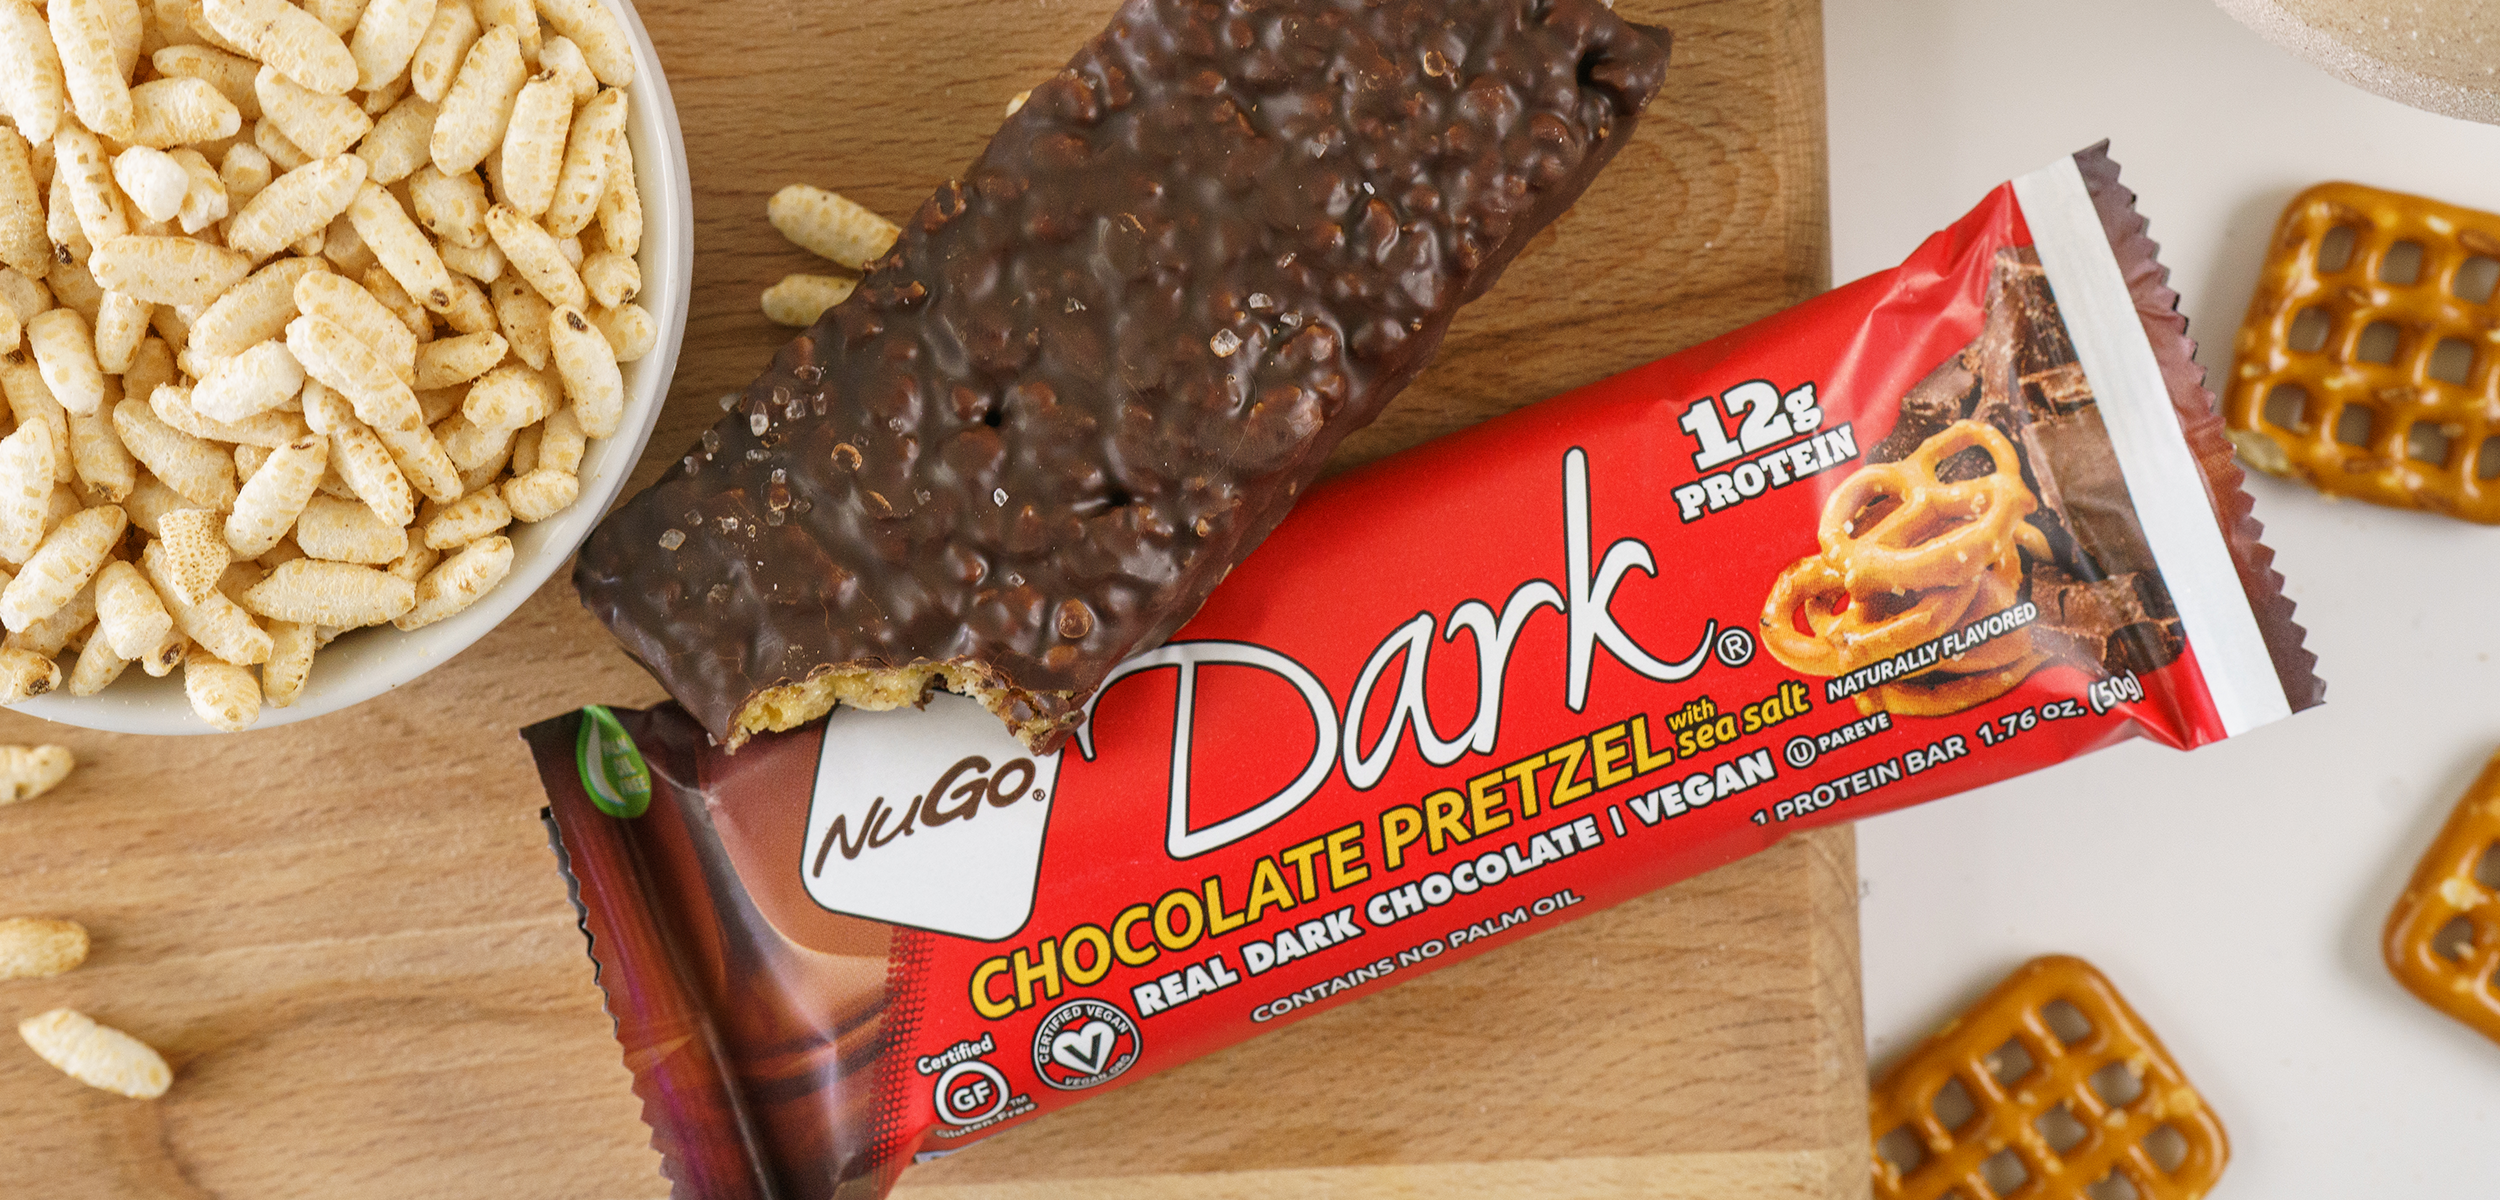 NuGo Dark Chocolate Pretzel Bar surrounded by Ingredients